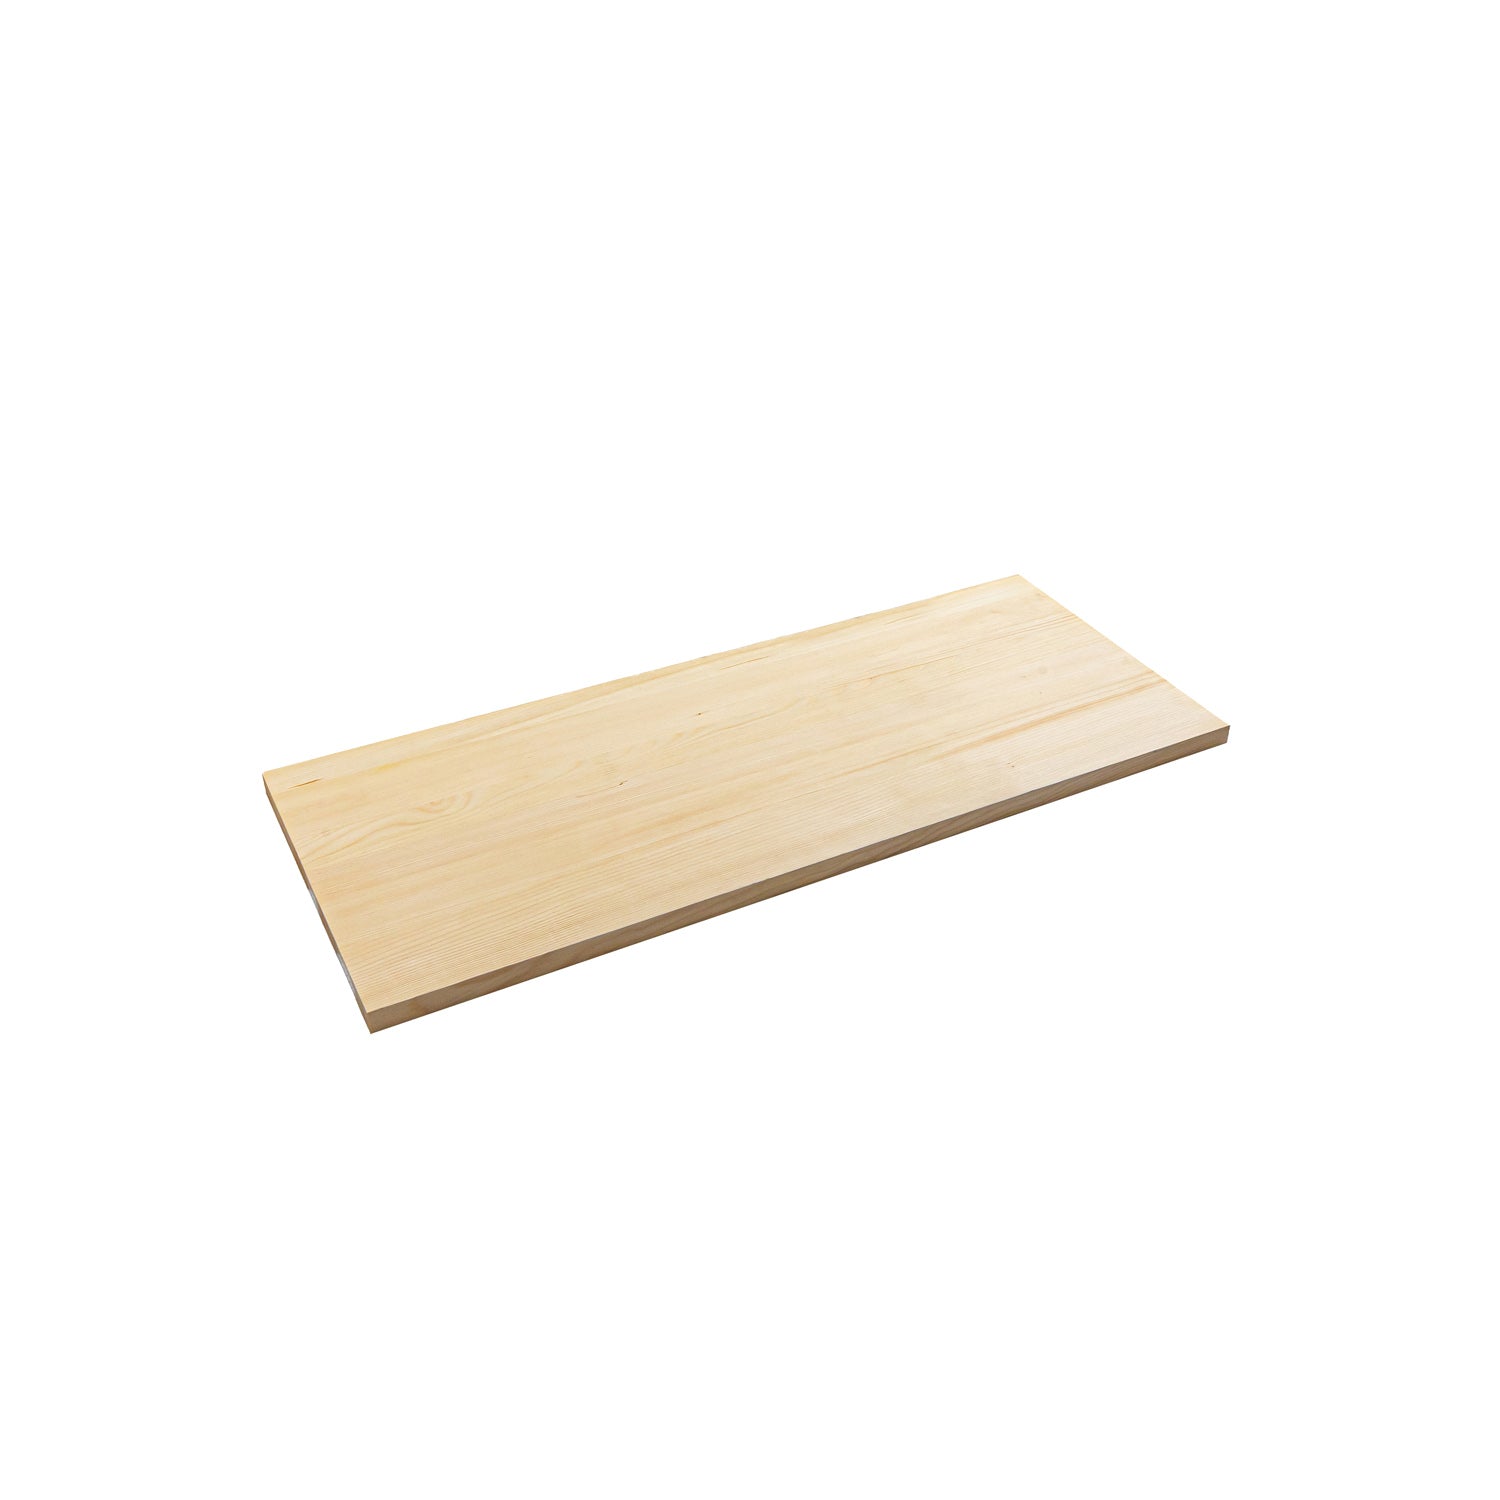 Pine Solid Wood Tabletop